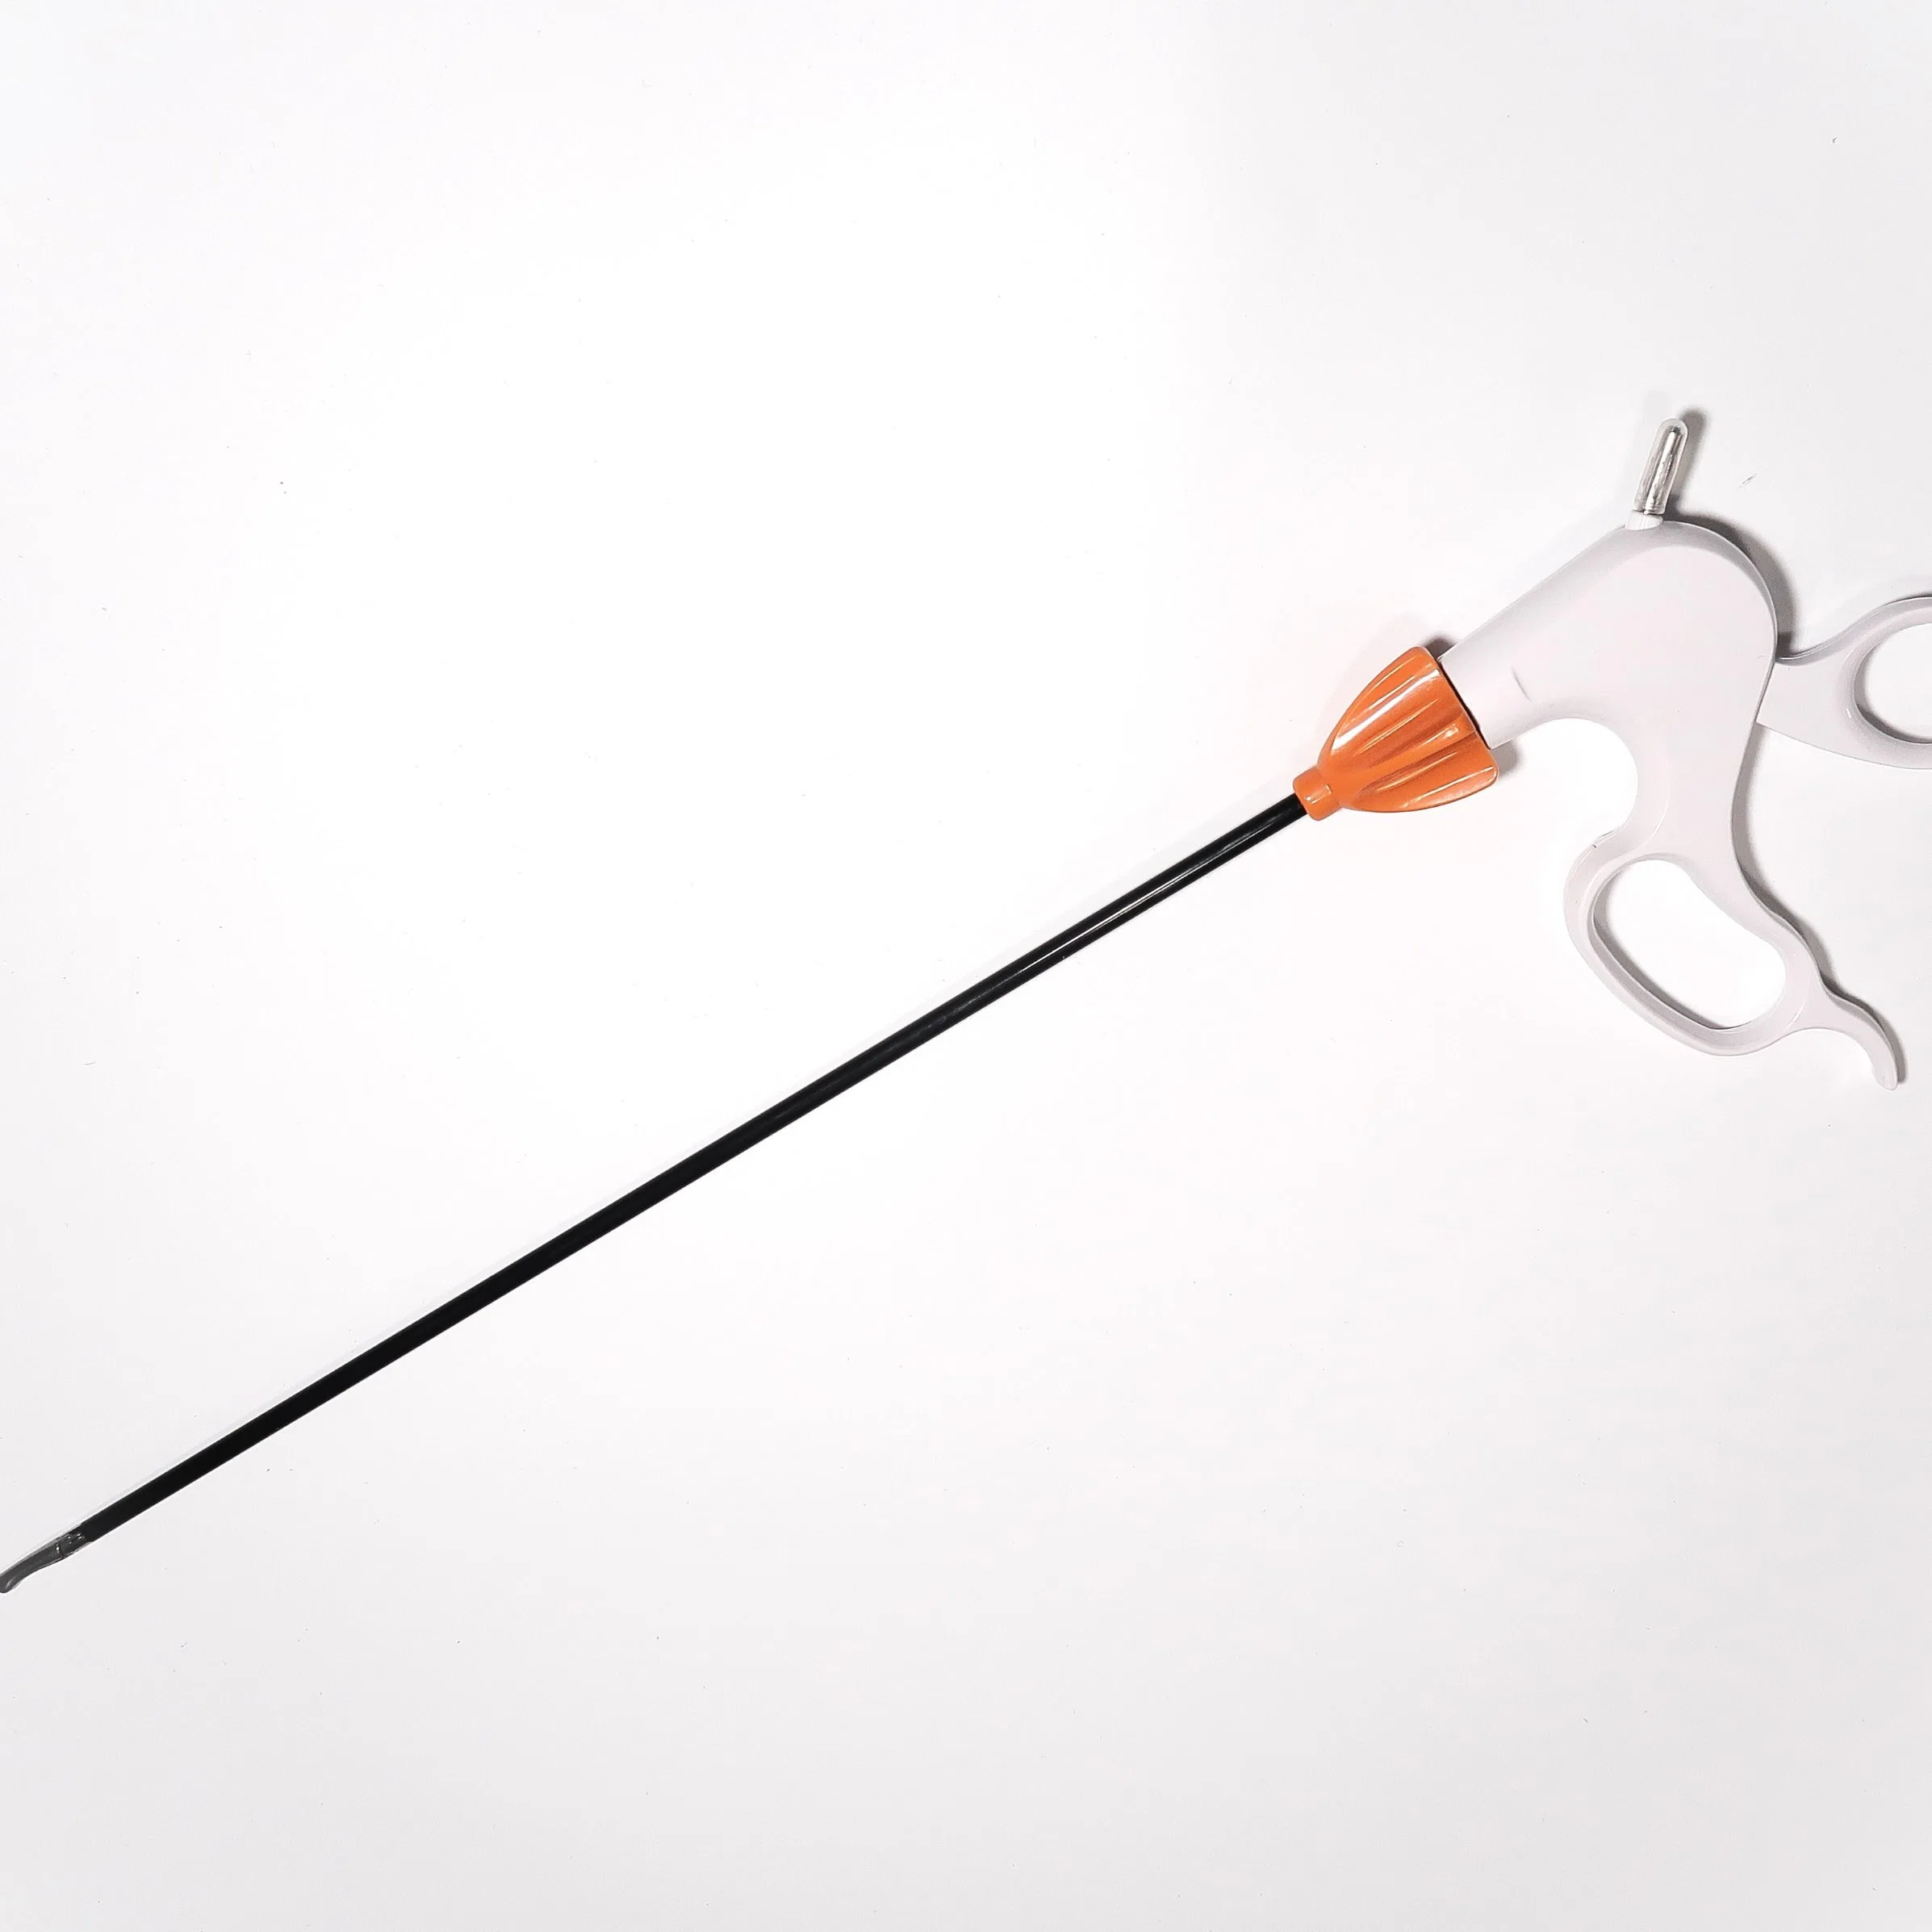 Single Use Abdominal Surgical Instrument Disposable Bioplar Forceps